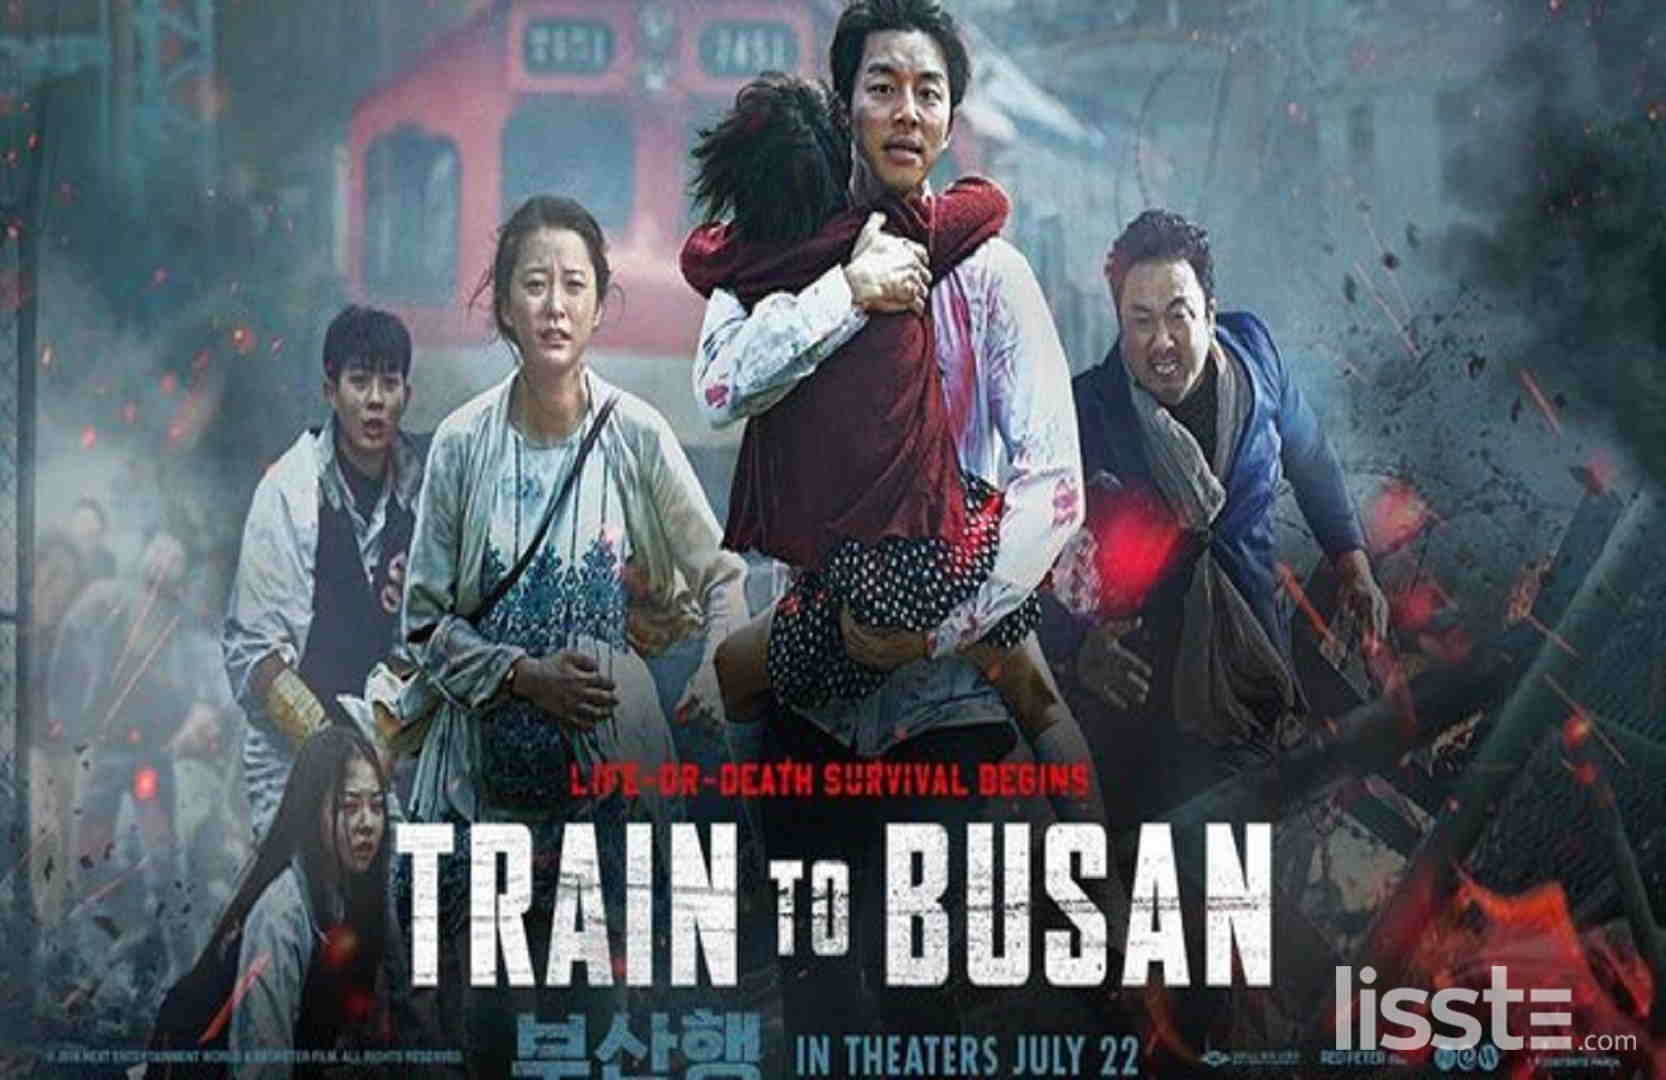 Train to Busan 1-1566846682.jpg